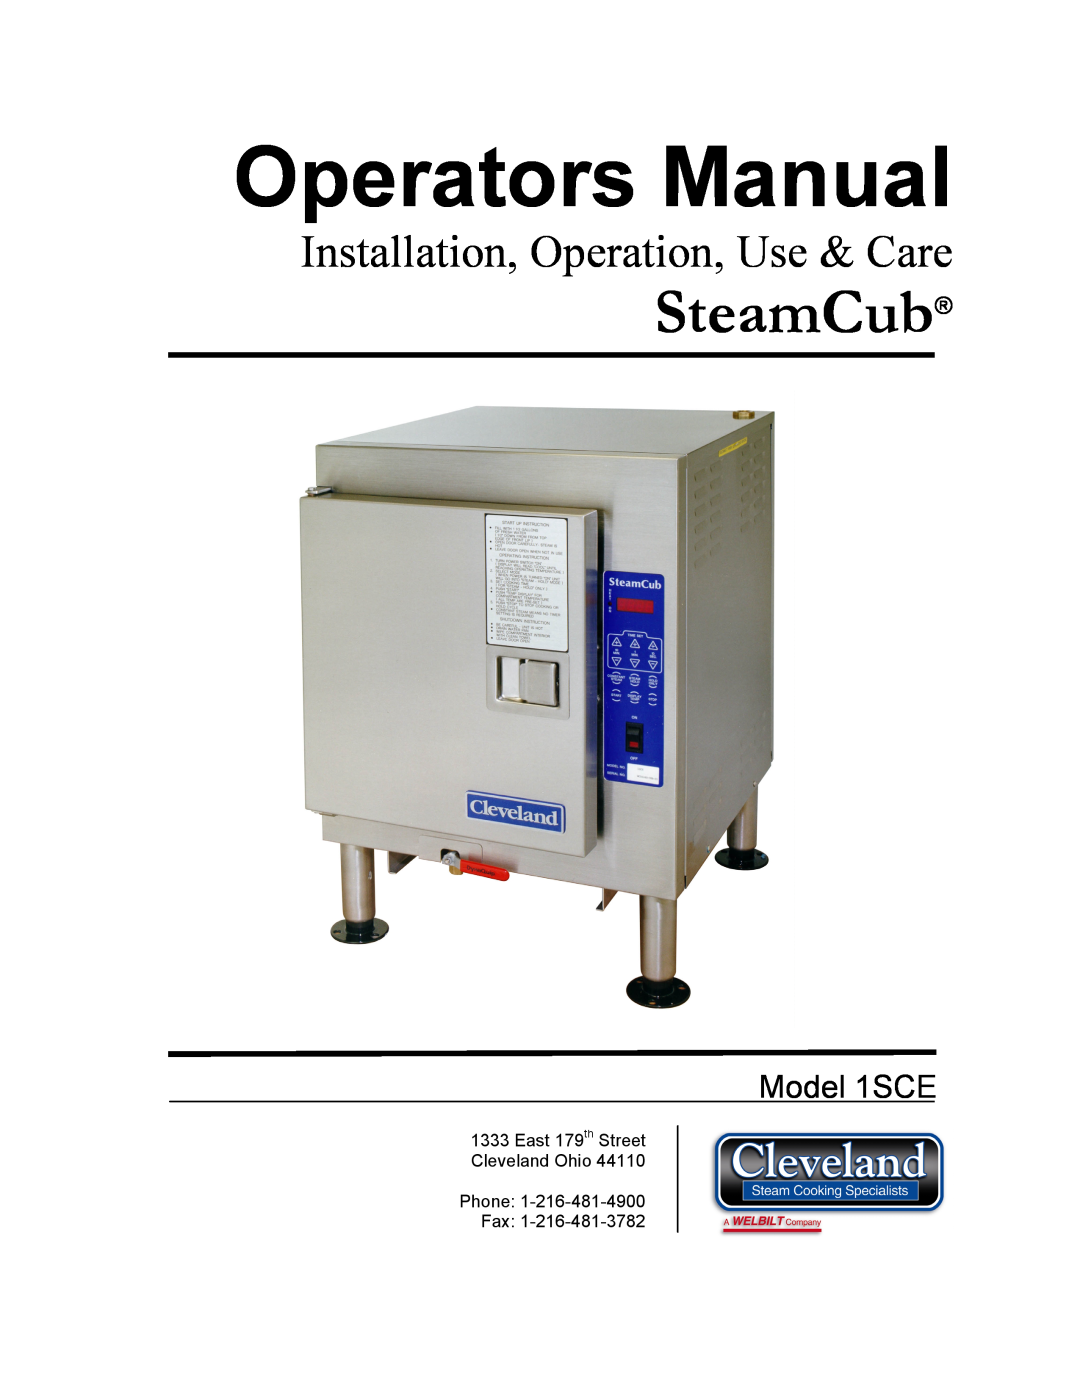 Cleveland Range manual SteamCub, Operators Manual, Installation, Operation, Use & Care, Model 1SCE 